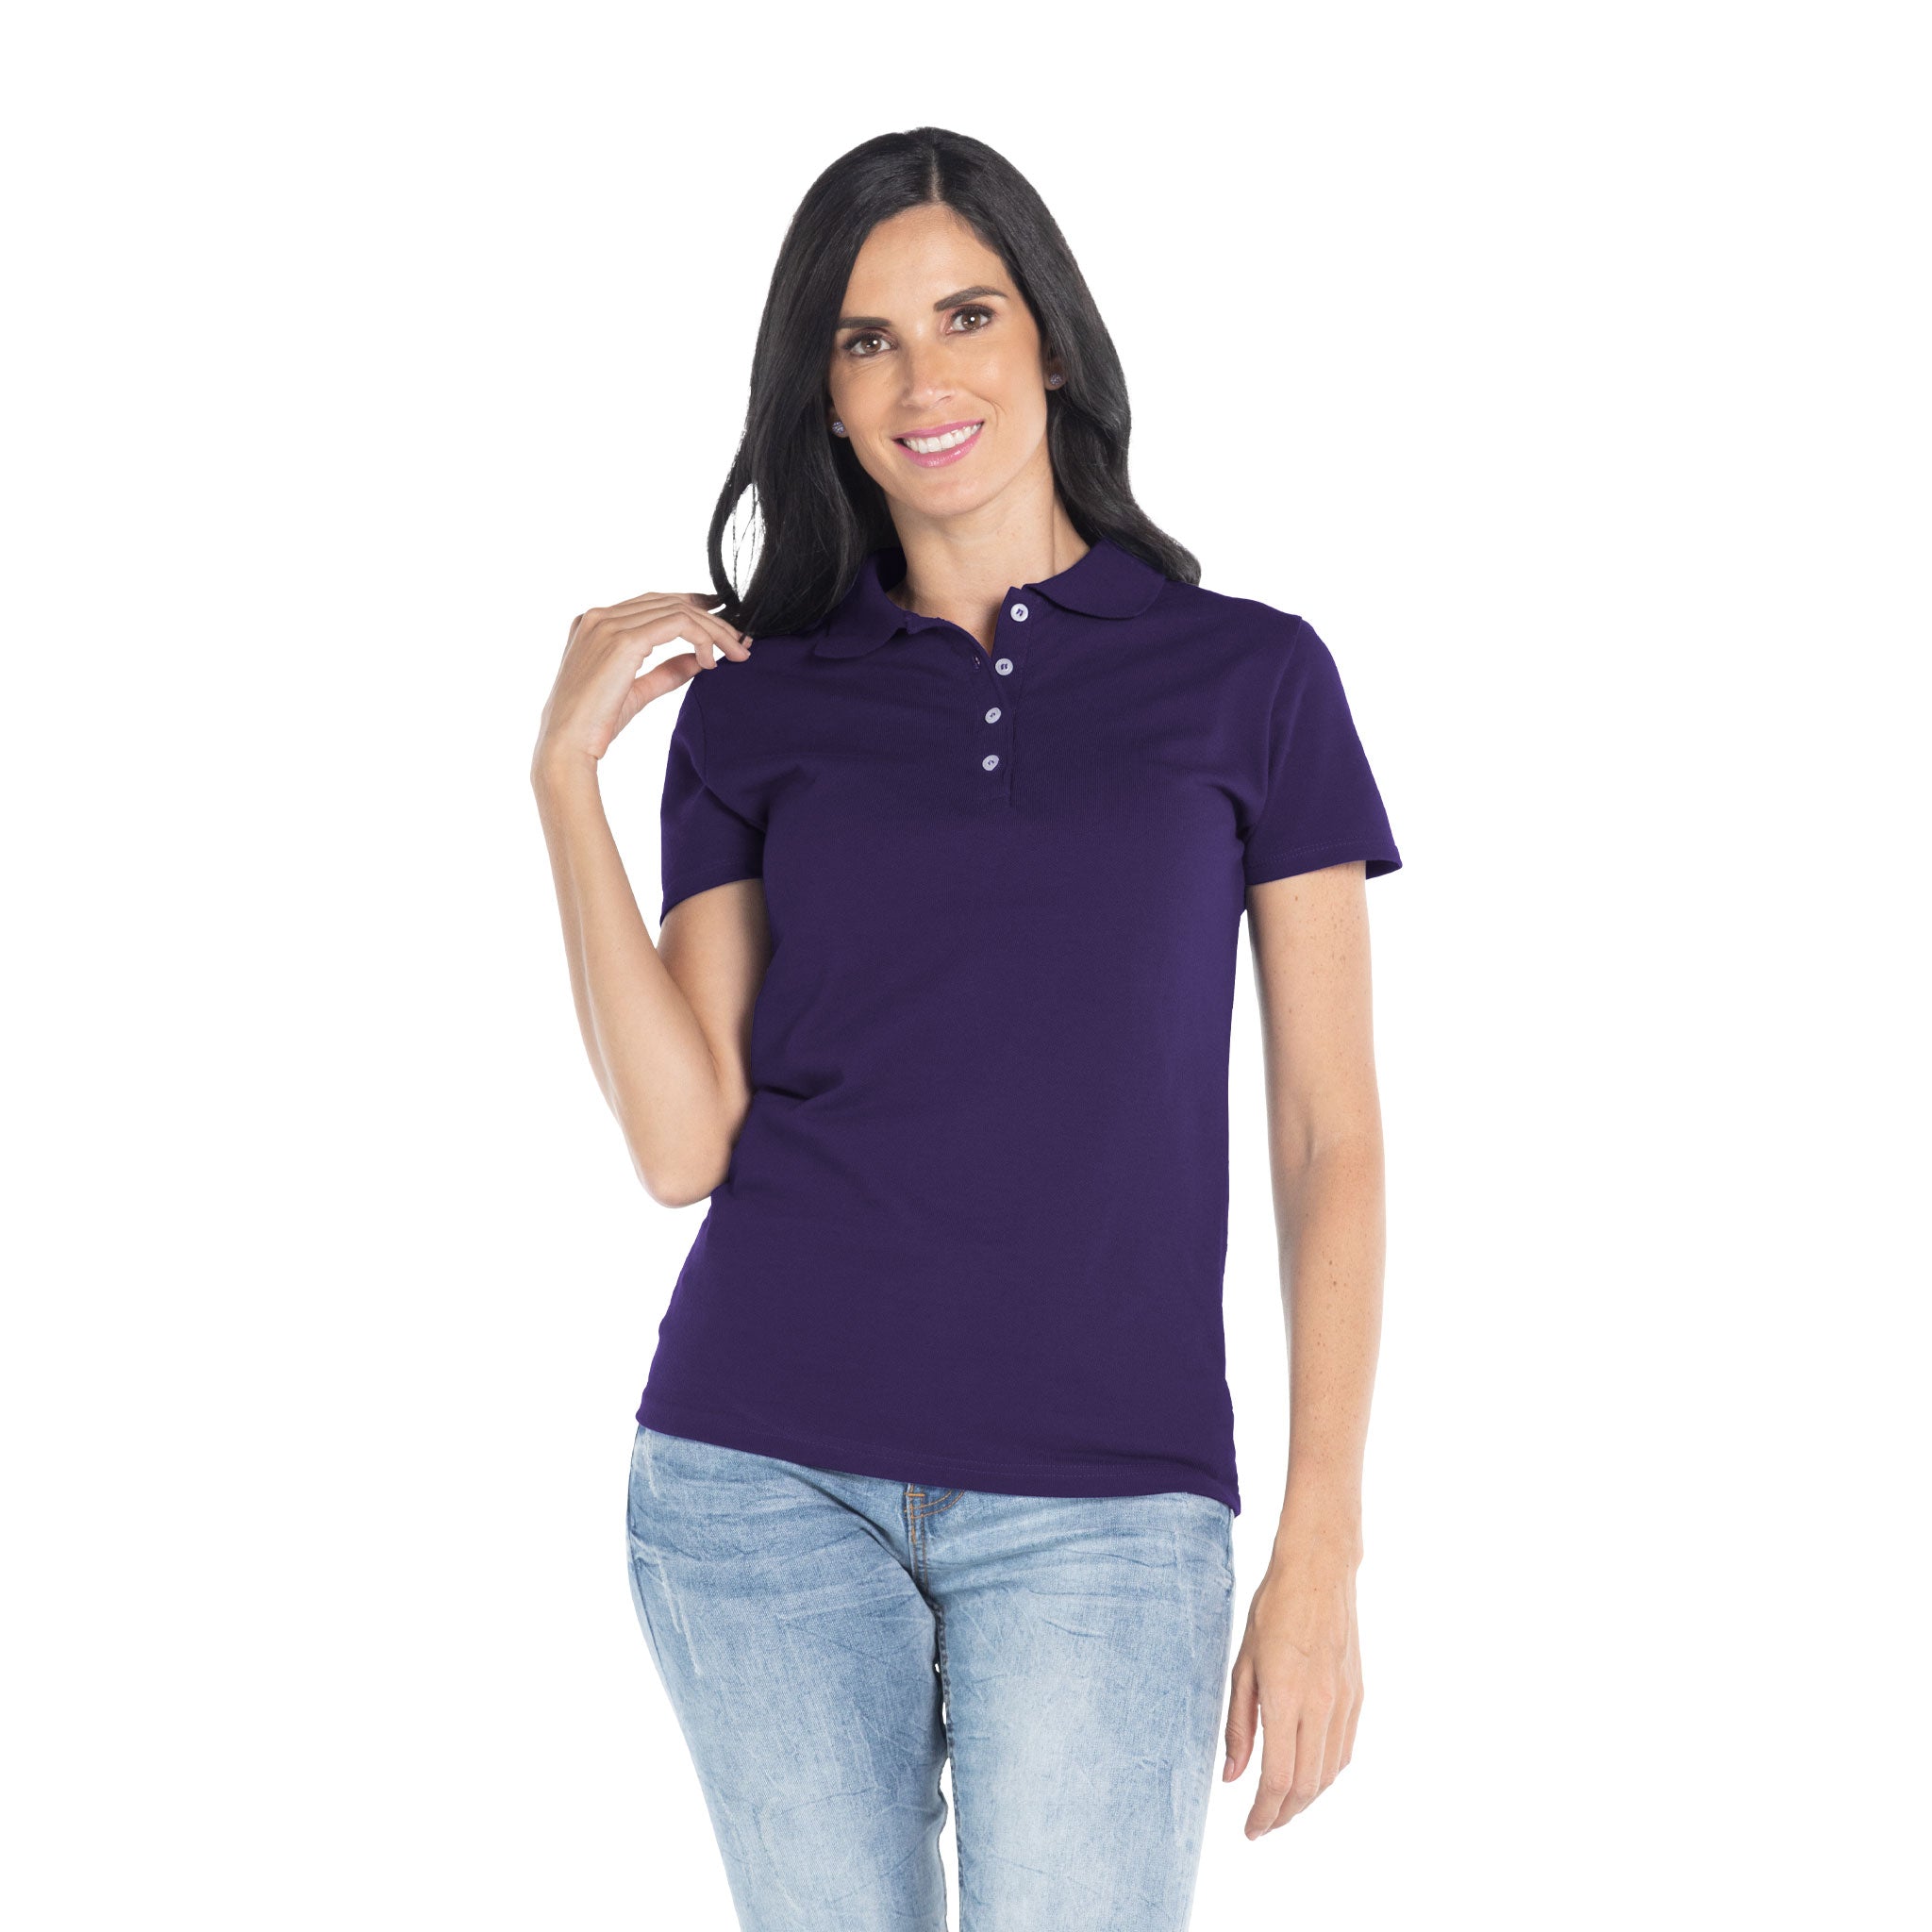 Mint – Women\'s Sport Yazbek (Purple) Silhouette USA Shirt